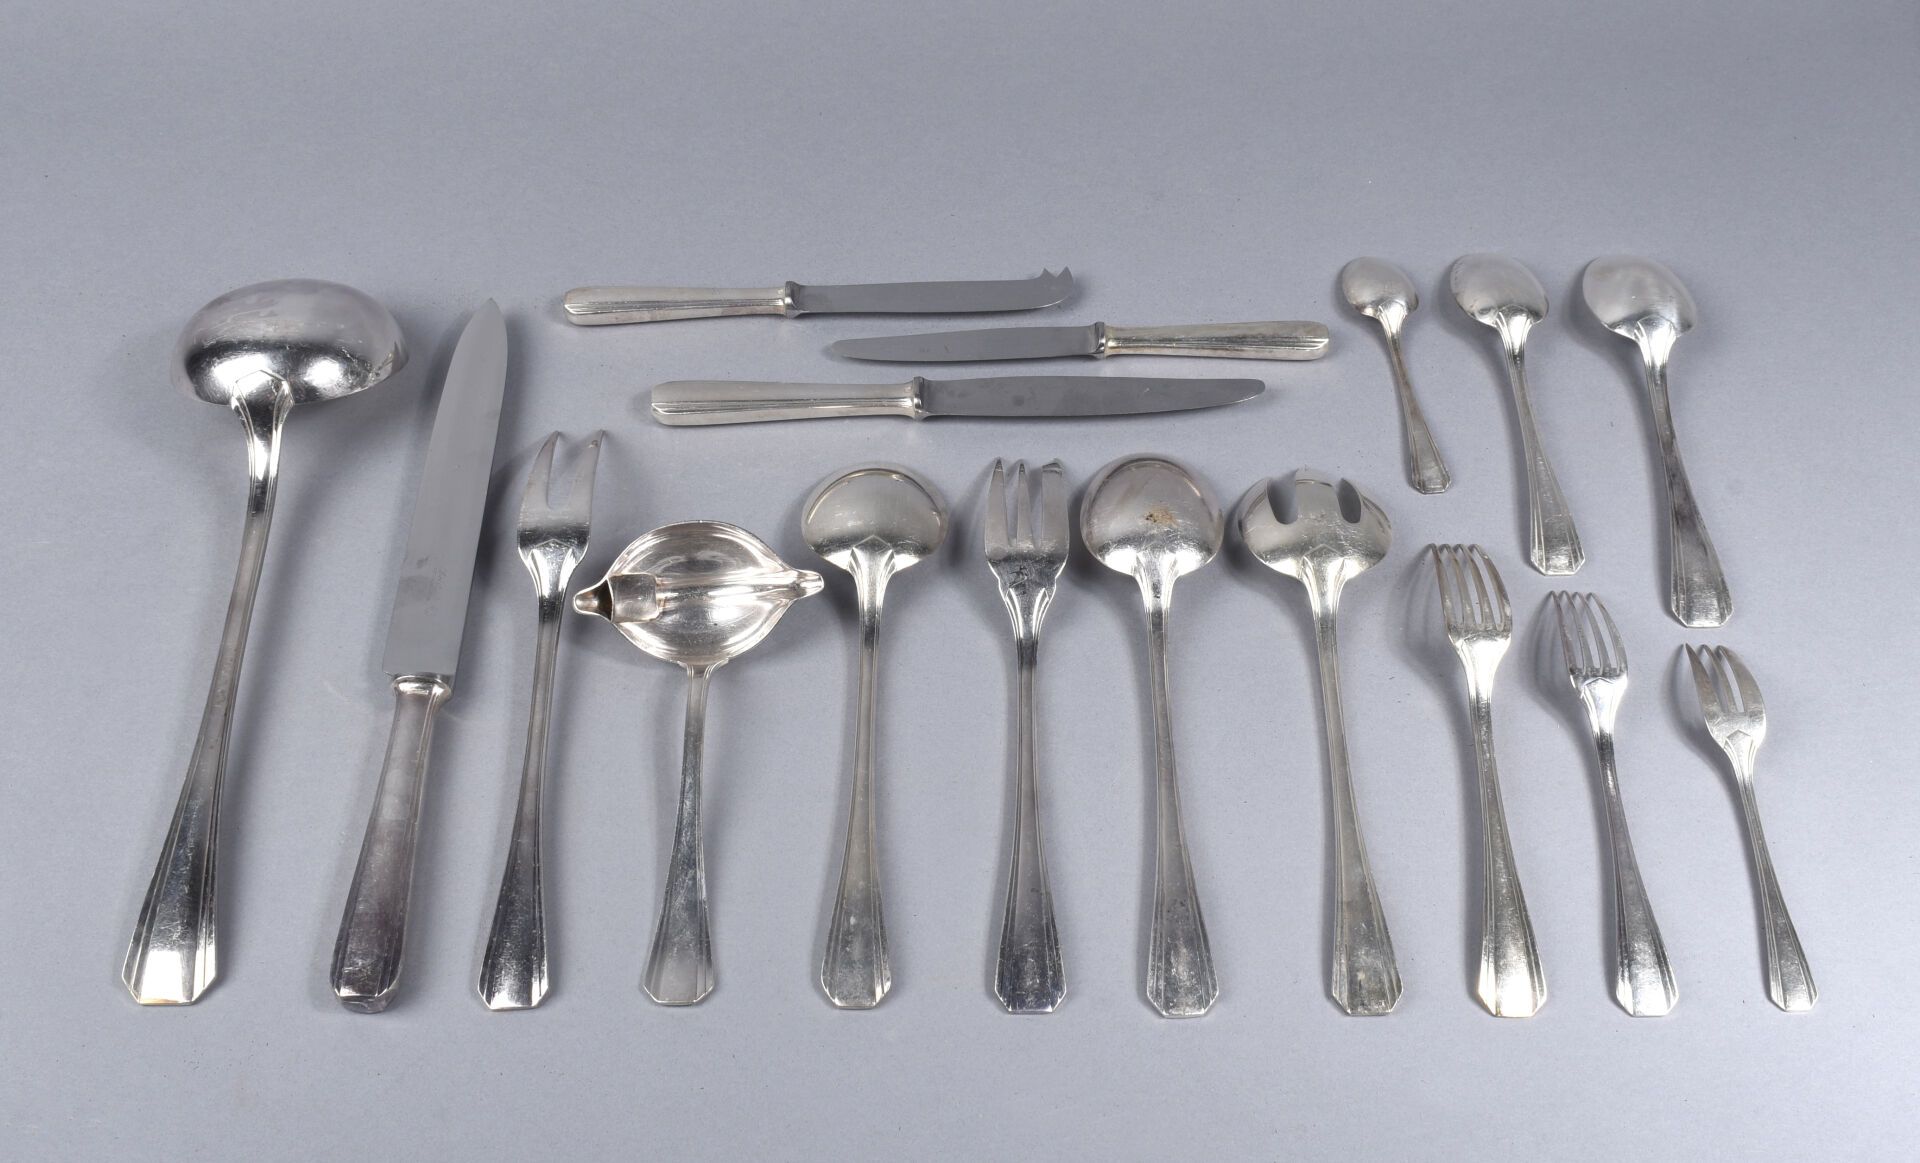 Null 克里斯托弗
装饰艺术风格的镀银金属手提箱的一部分，Boréal 型号，饰有细丝。包括 96 件餐具：
- 12 件餐具
- 10 把餐刀
- 12 件&hellip;